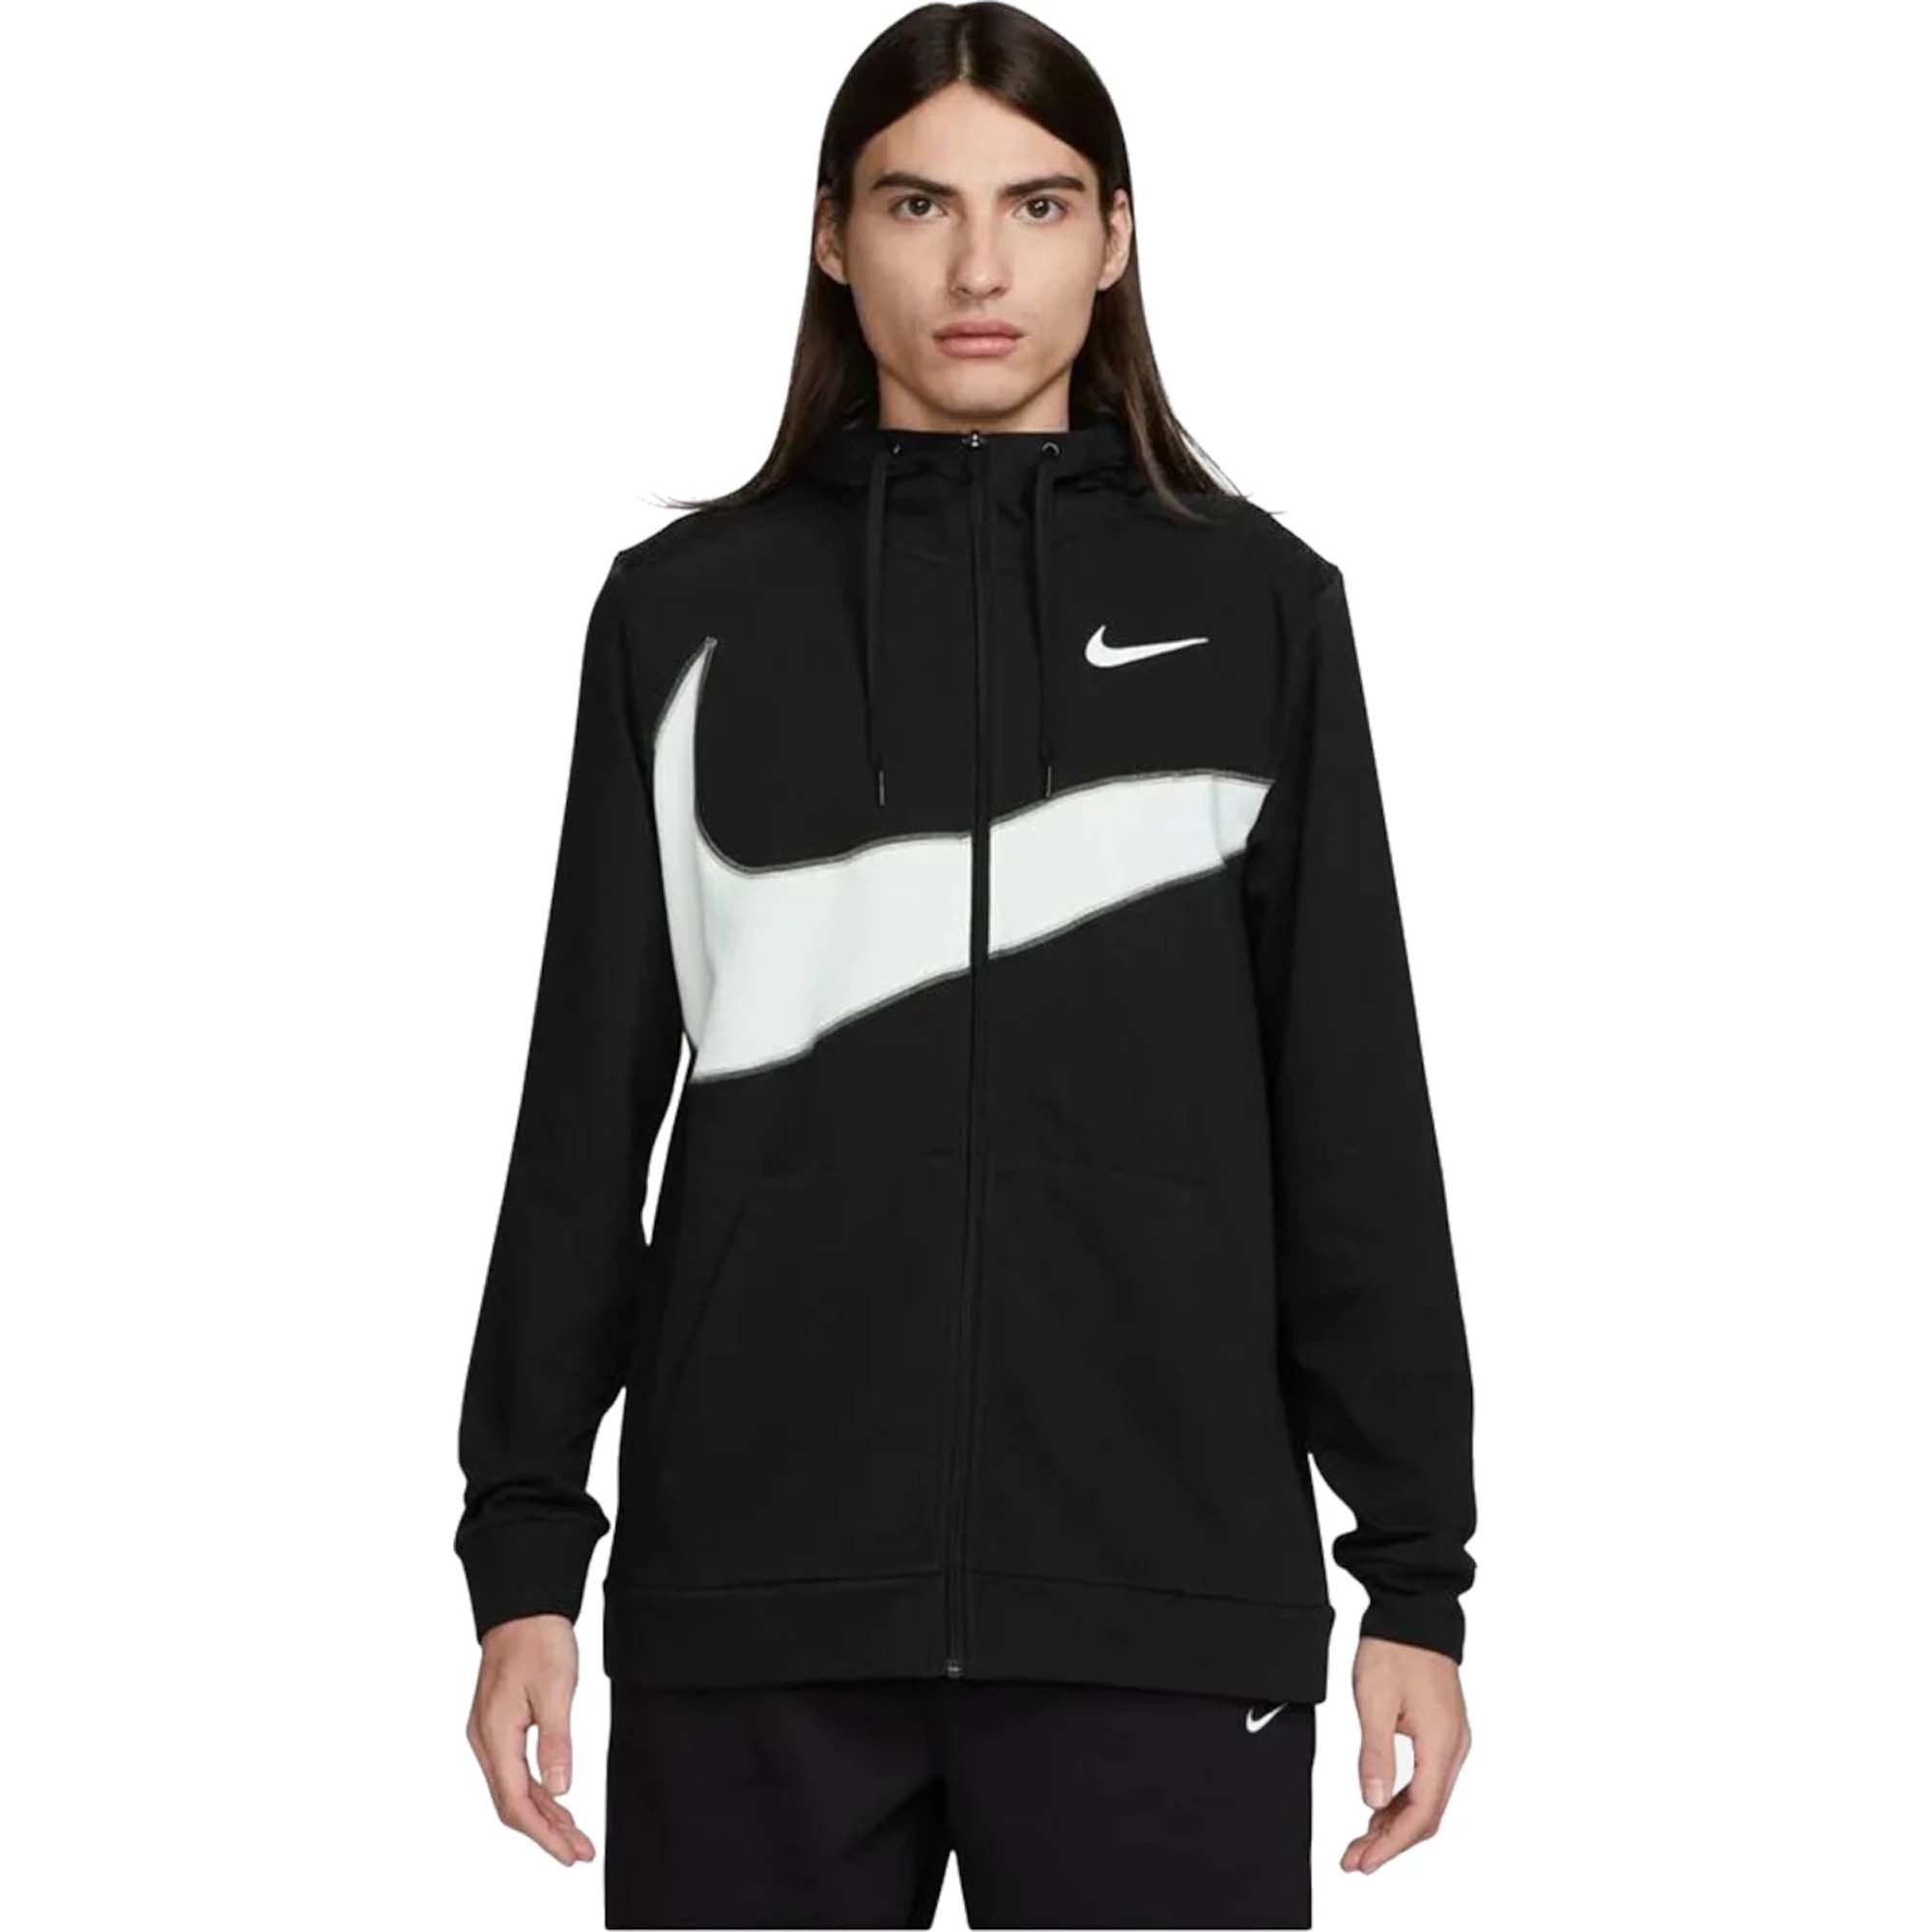 NIKE Nike dri-fit Fleece Full-Zip